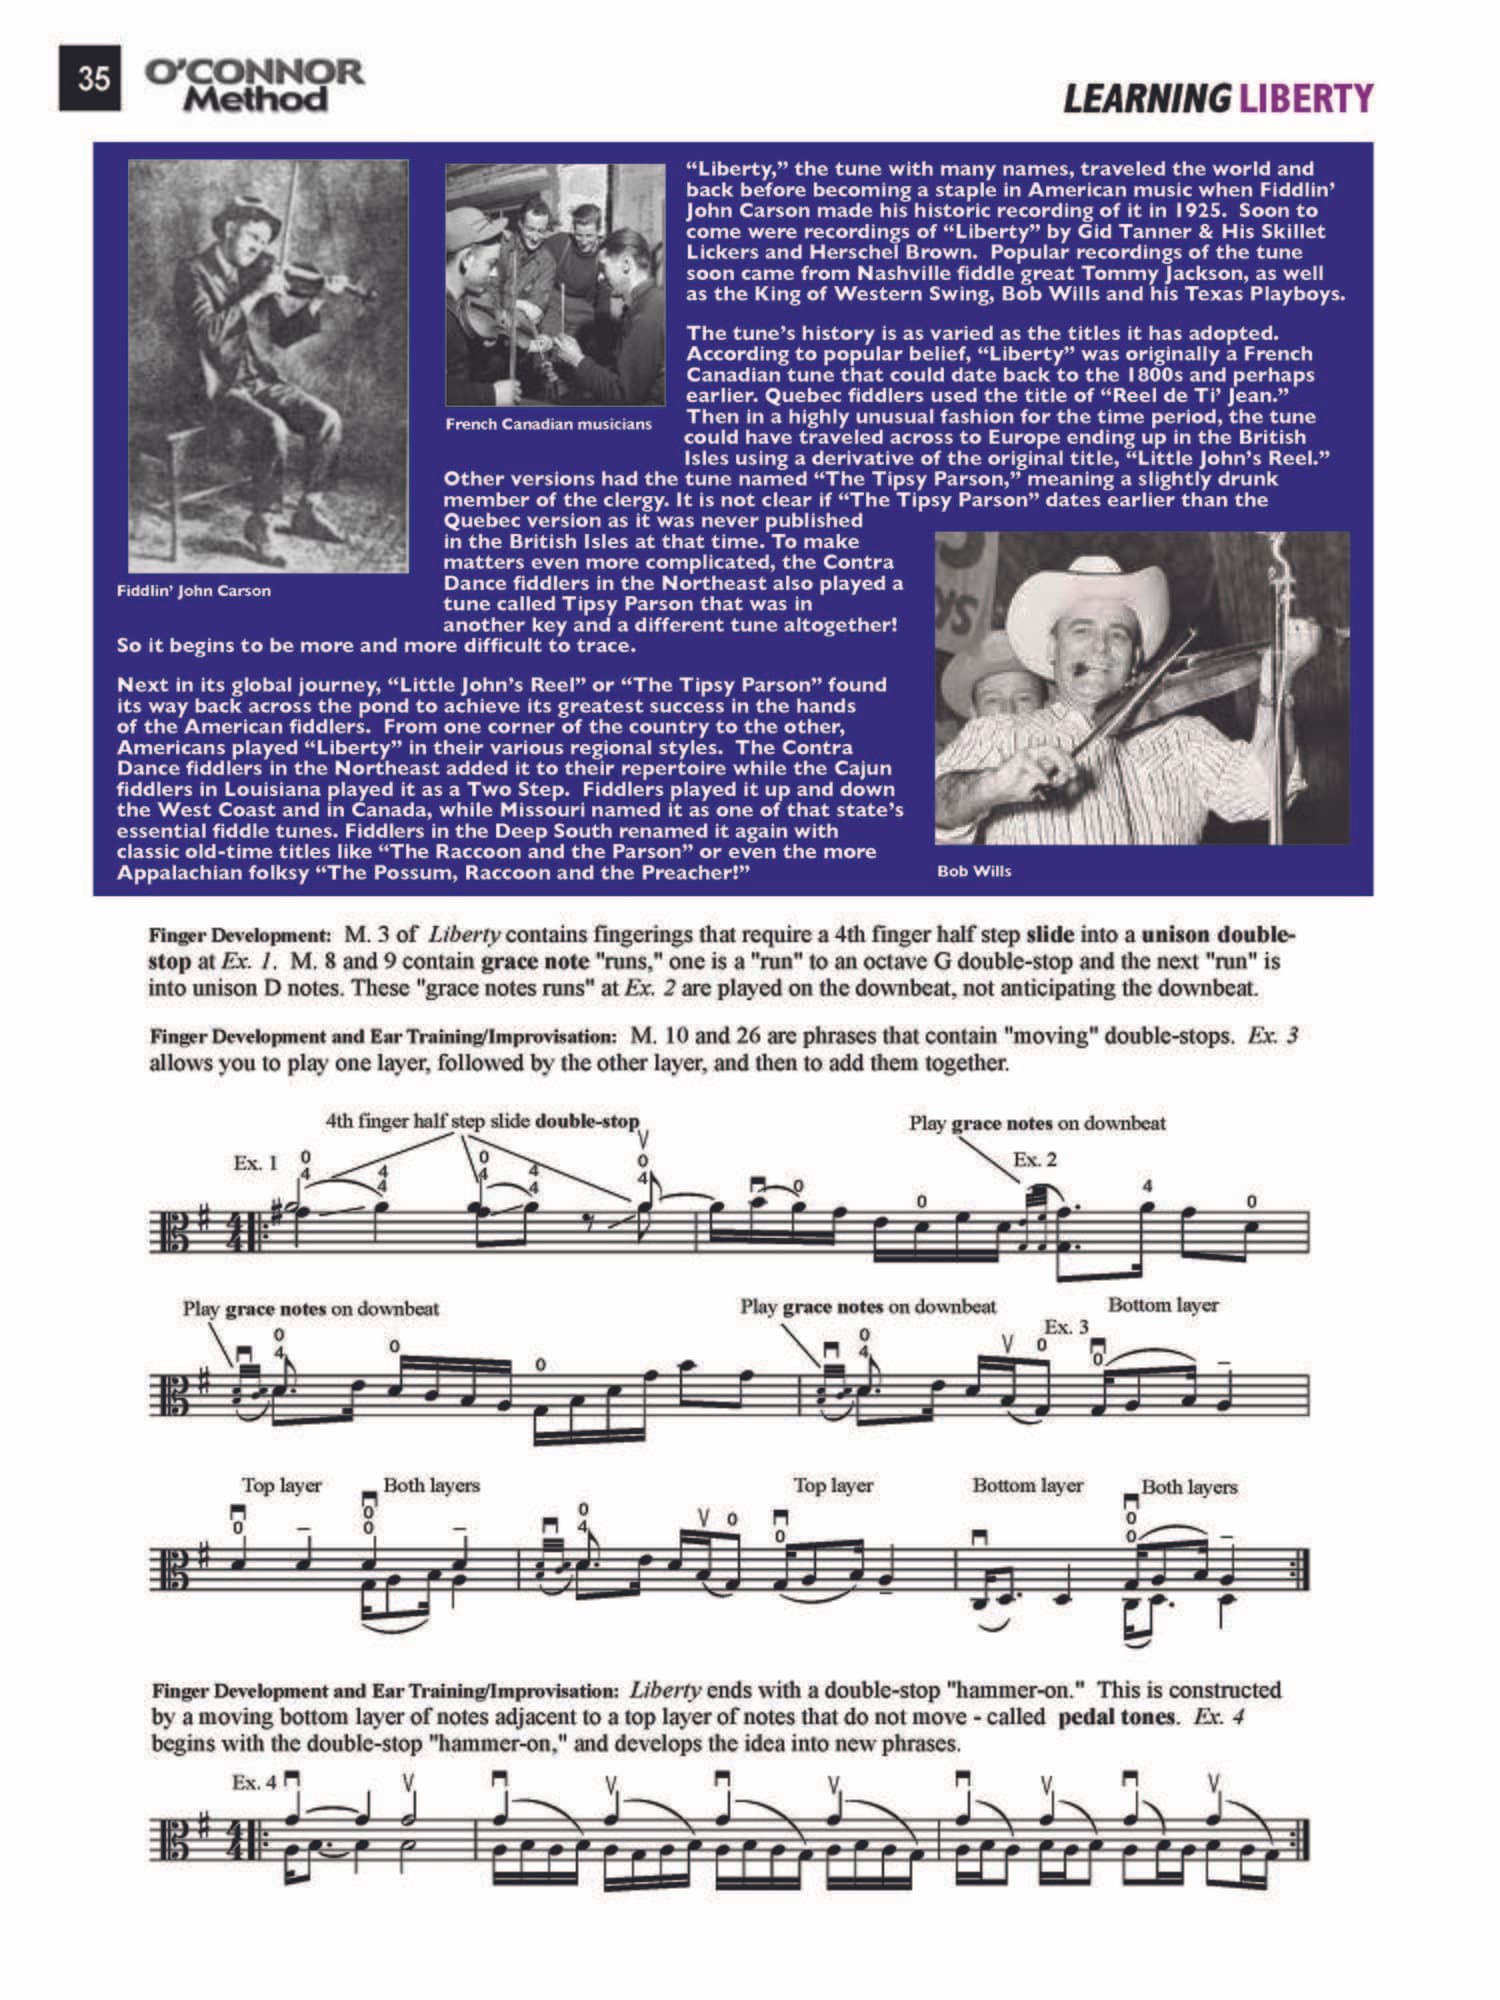 O'Connor Viola Method Book III - Digital Download